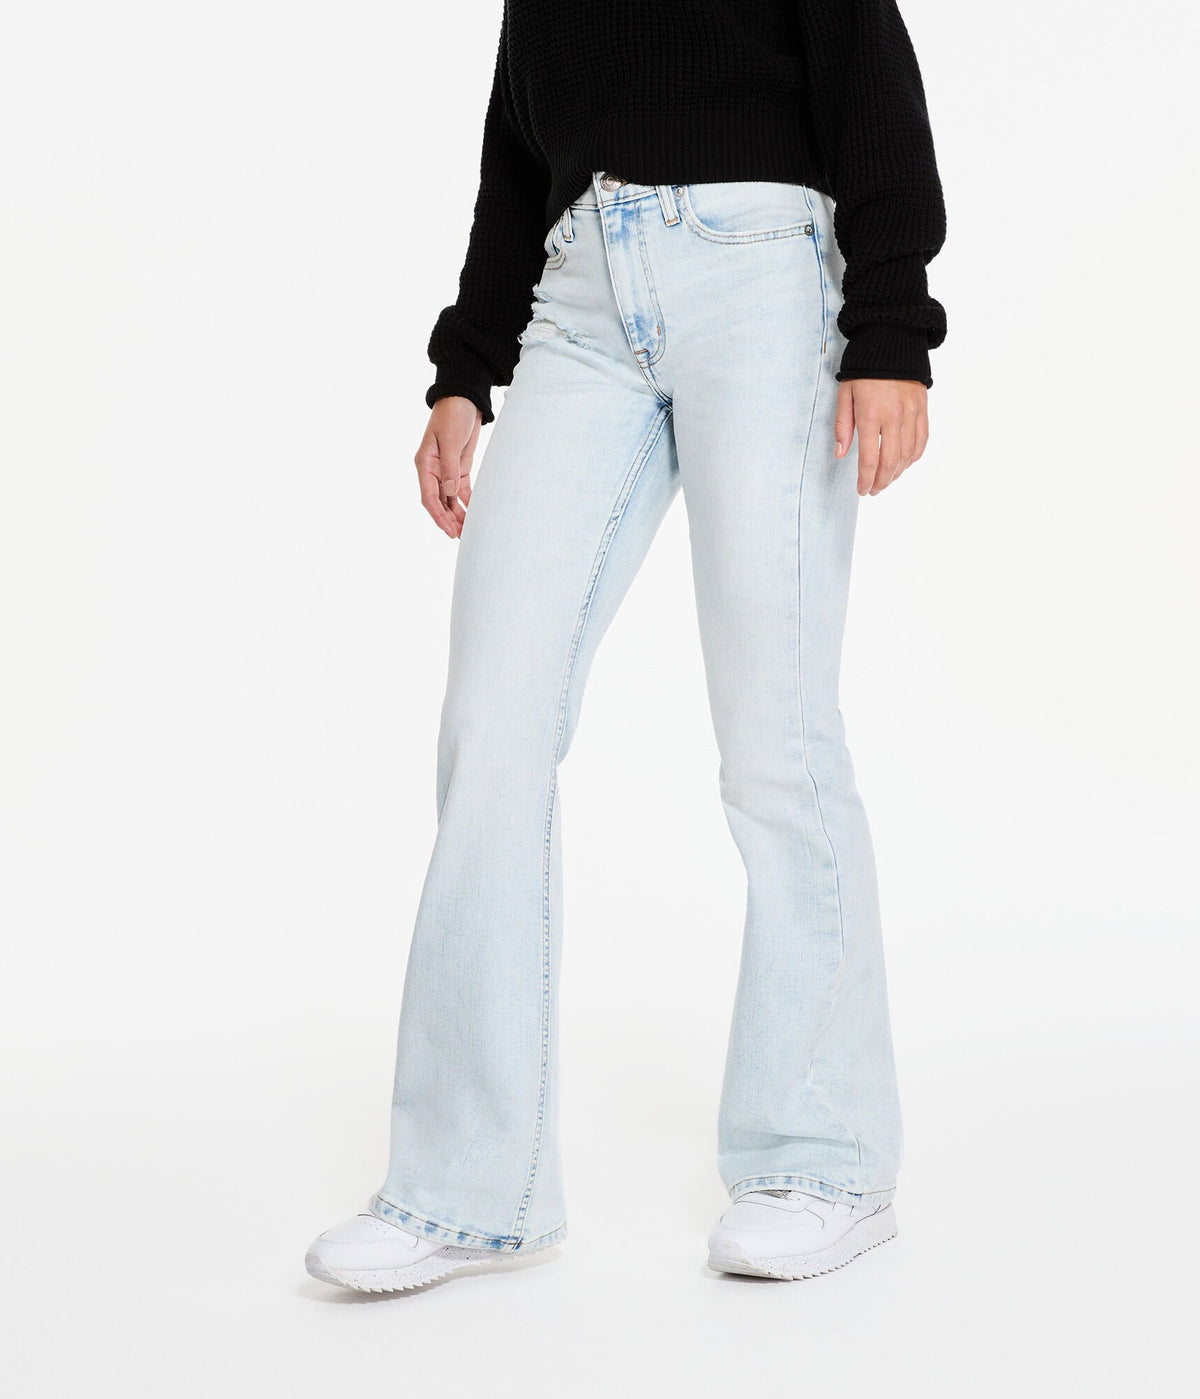 Aeropostale Womens' High-Rise Flare Jean - Blue - Size 12 R - Cotton - Teen Fashion & Clothing Light Wash